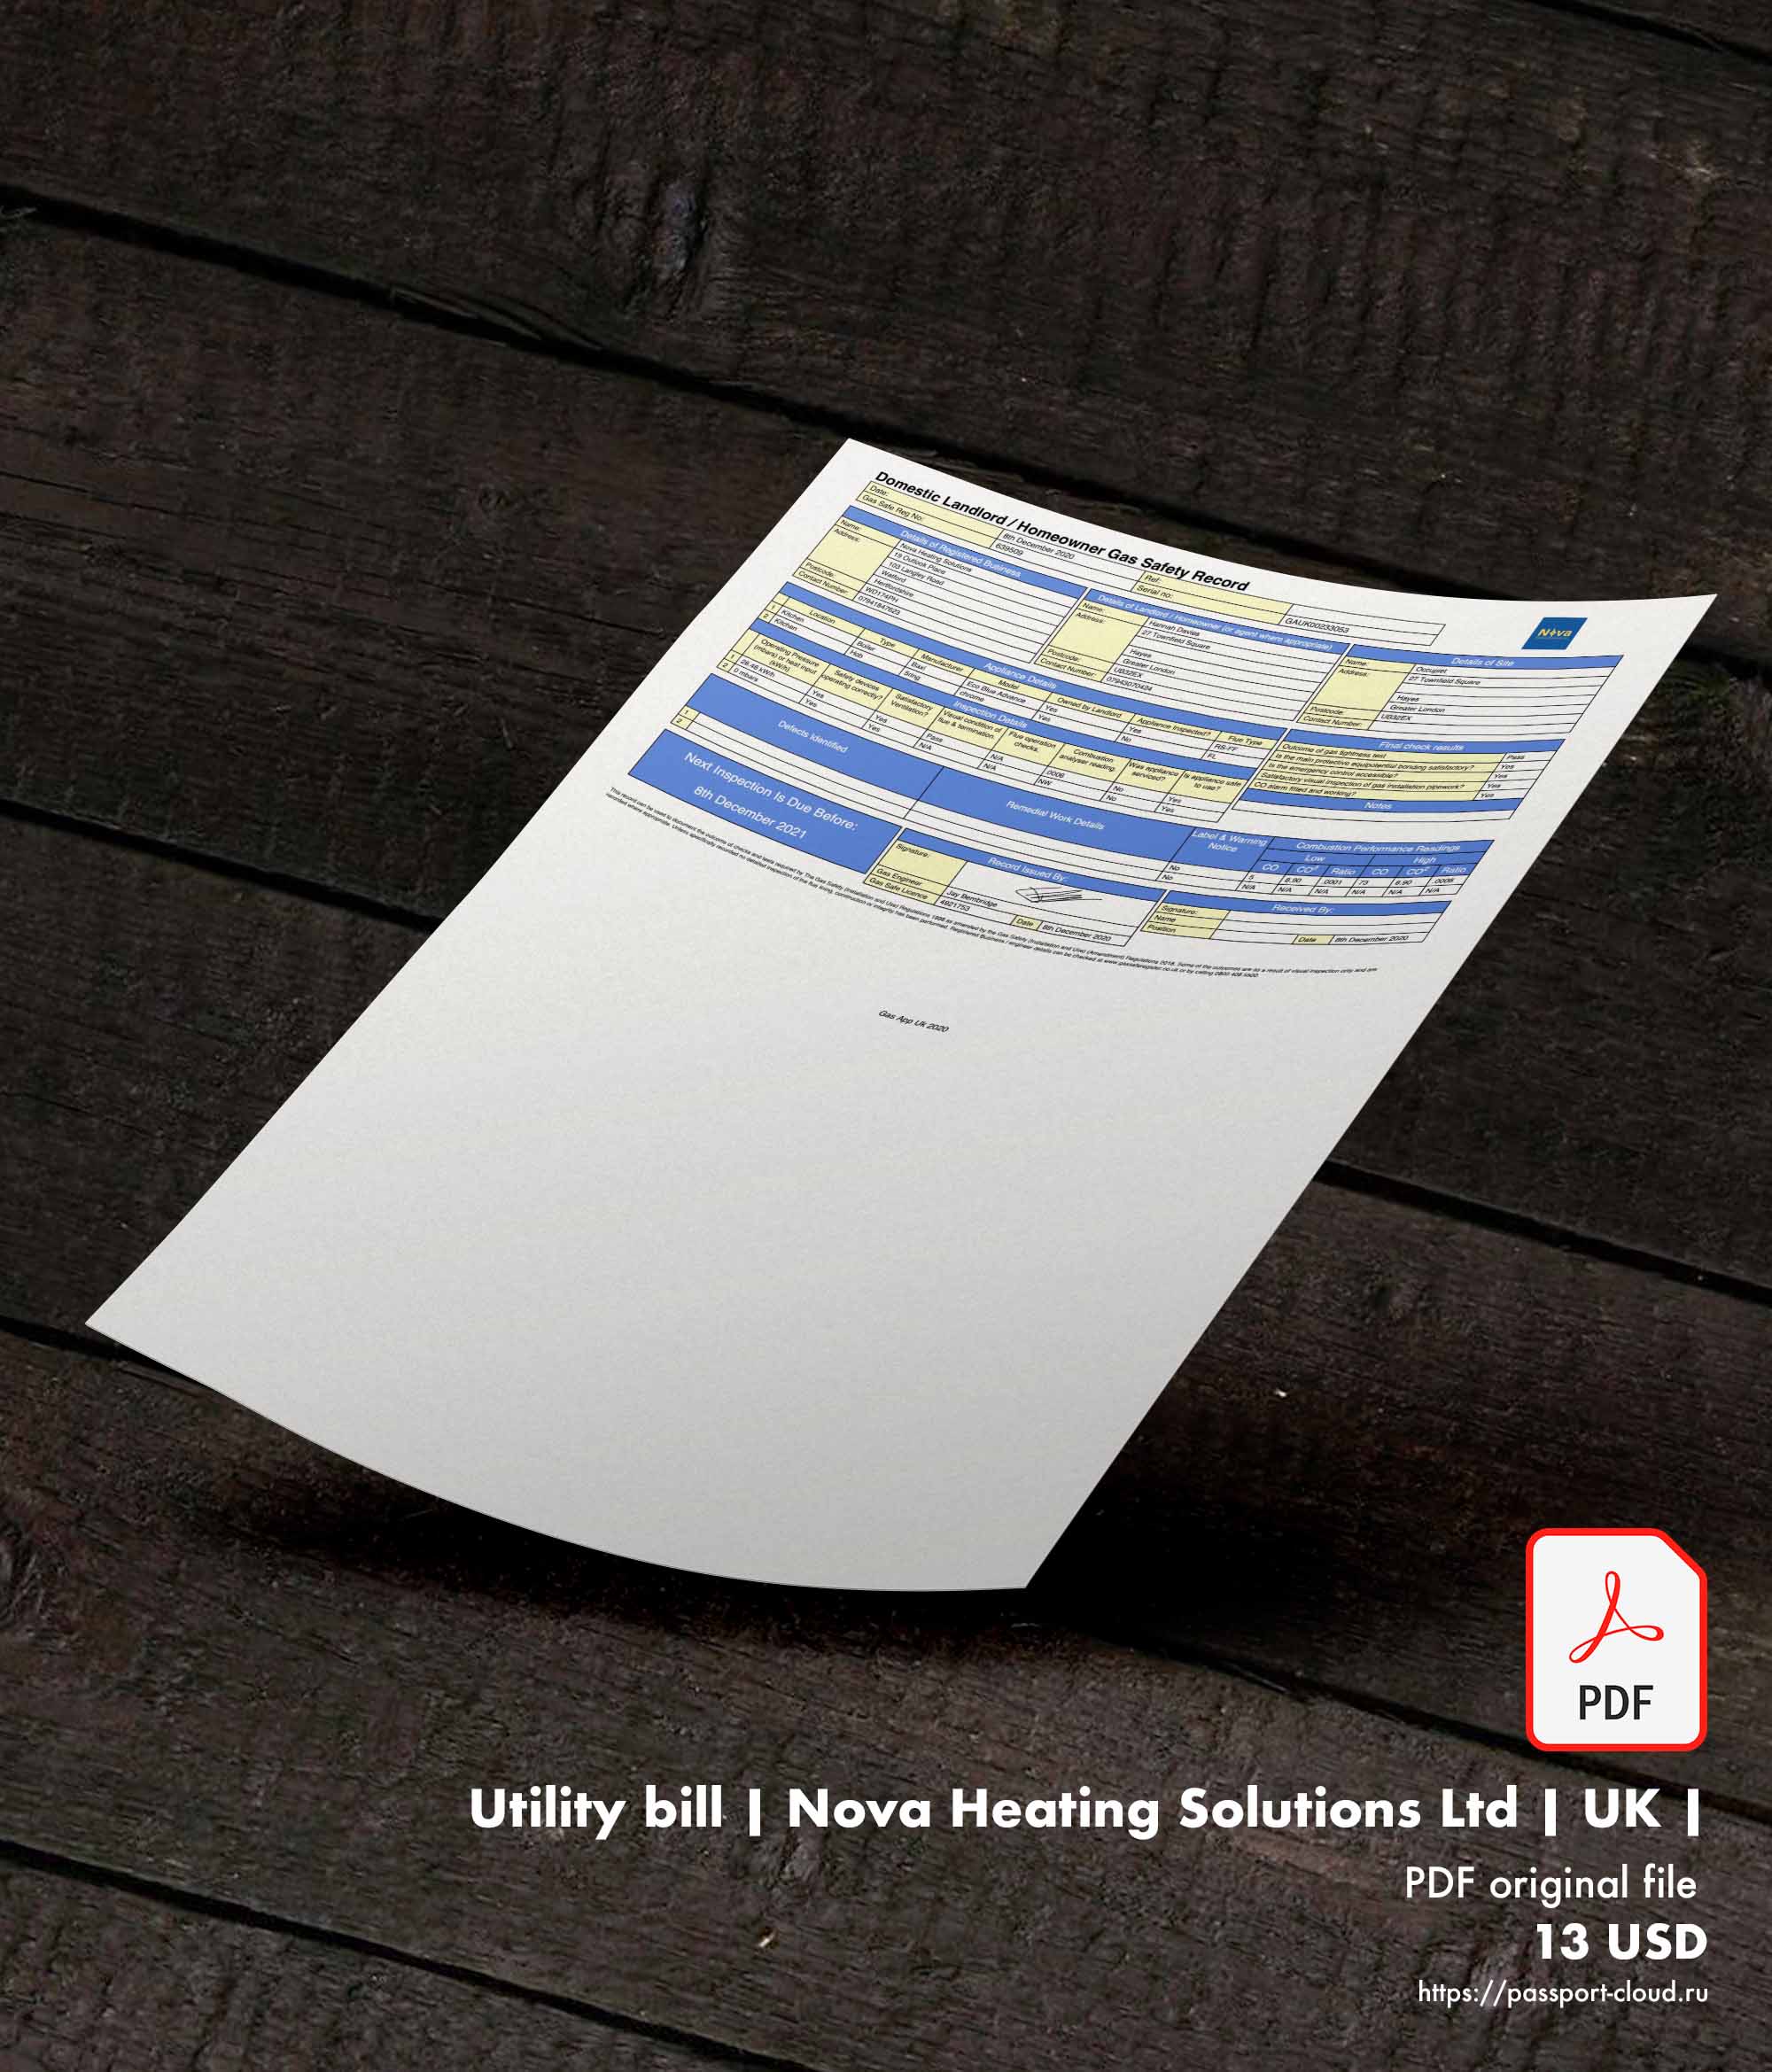 Utility bill | Nova Heating Solutions Ltd | UK |1